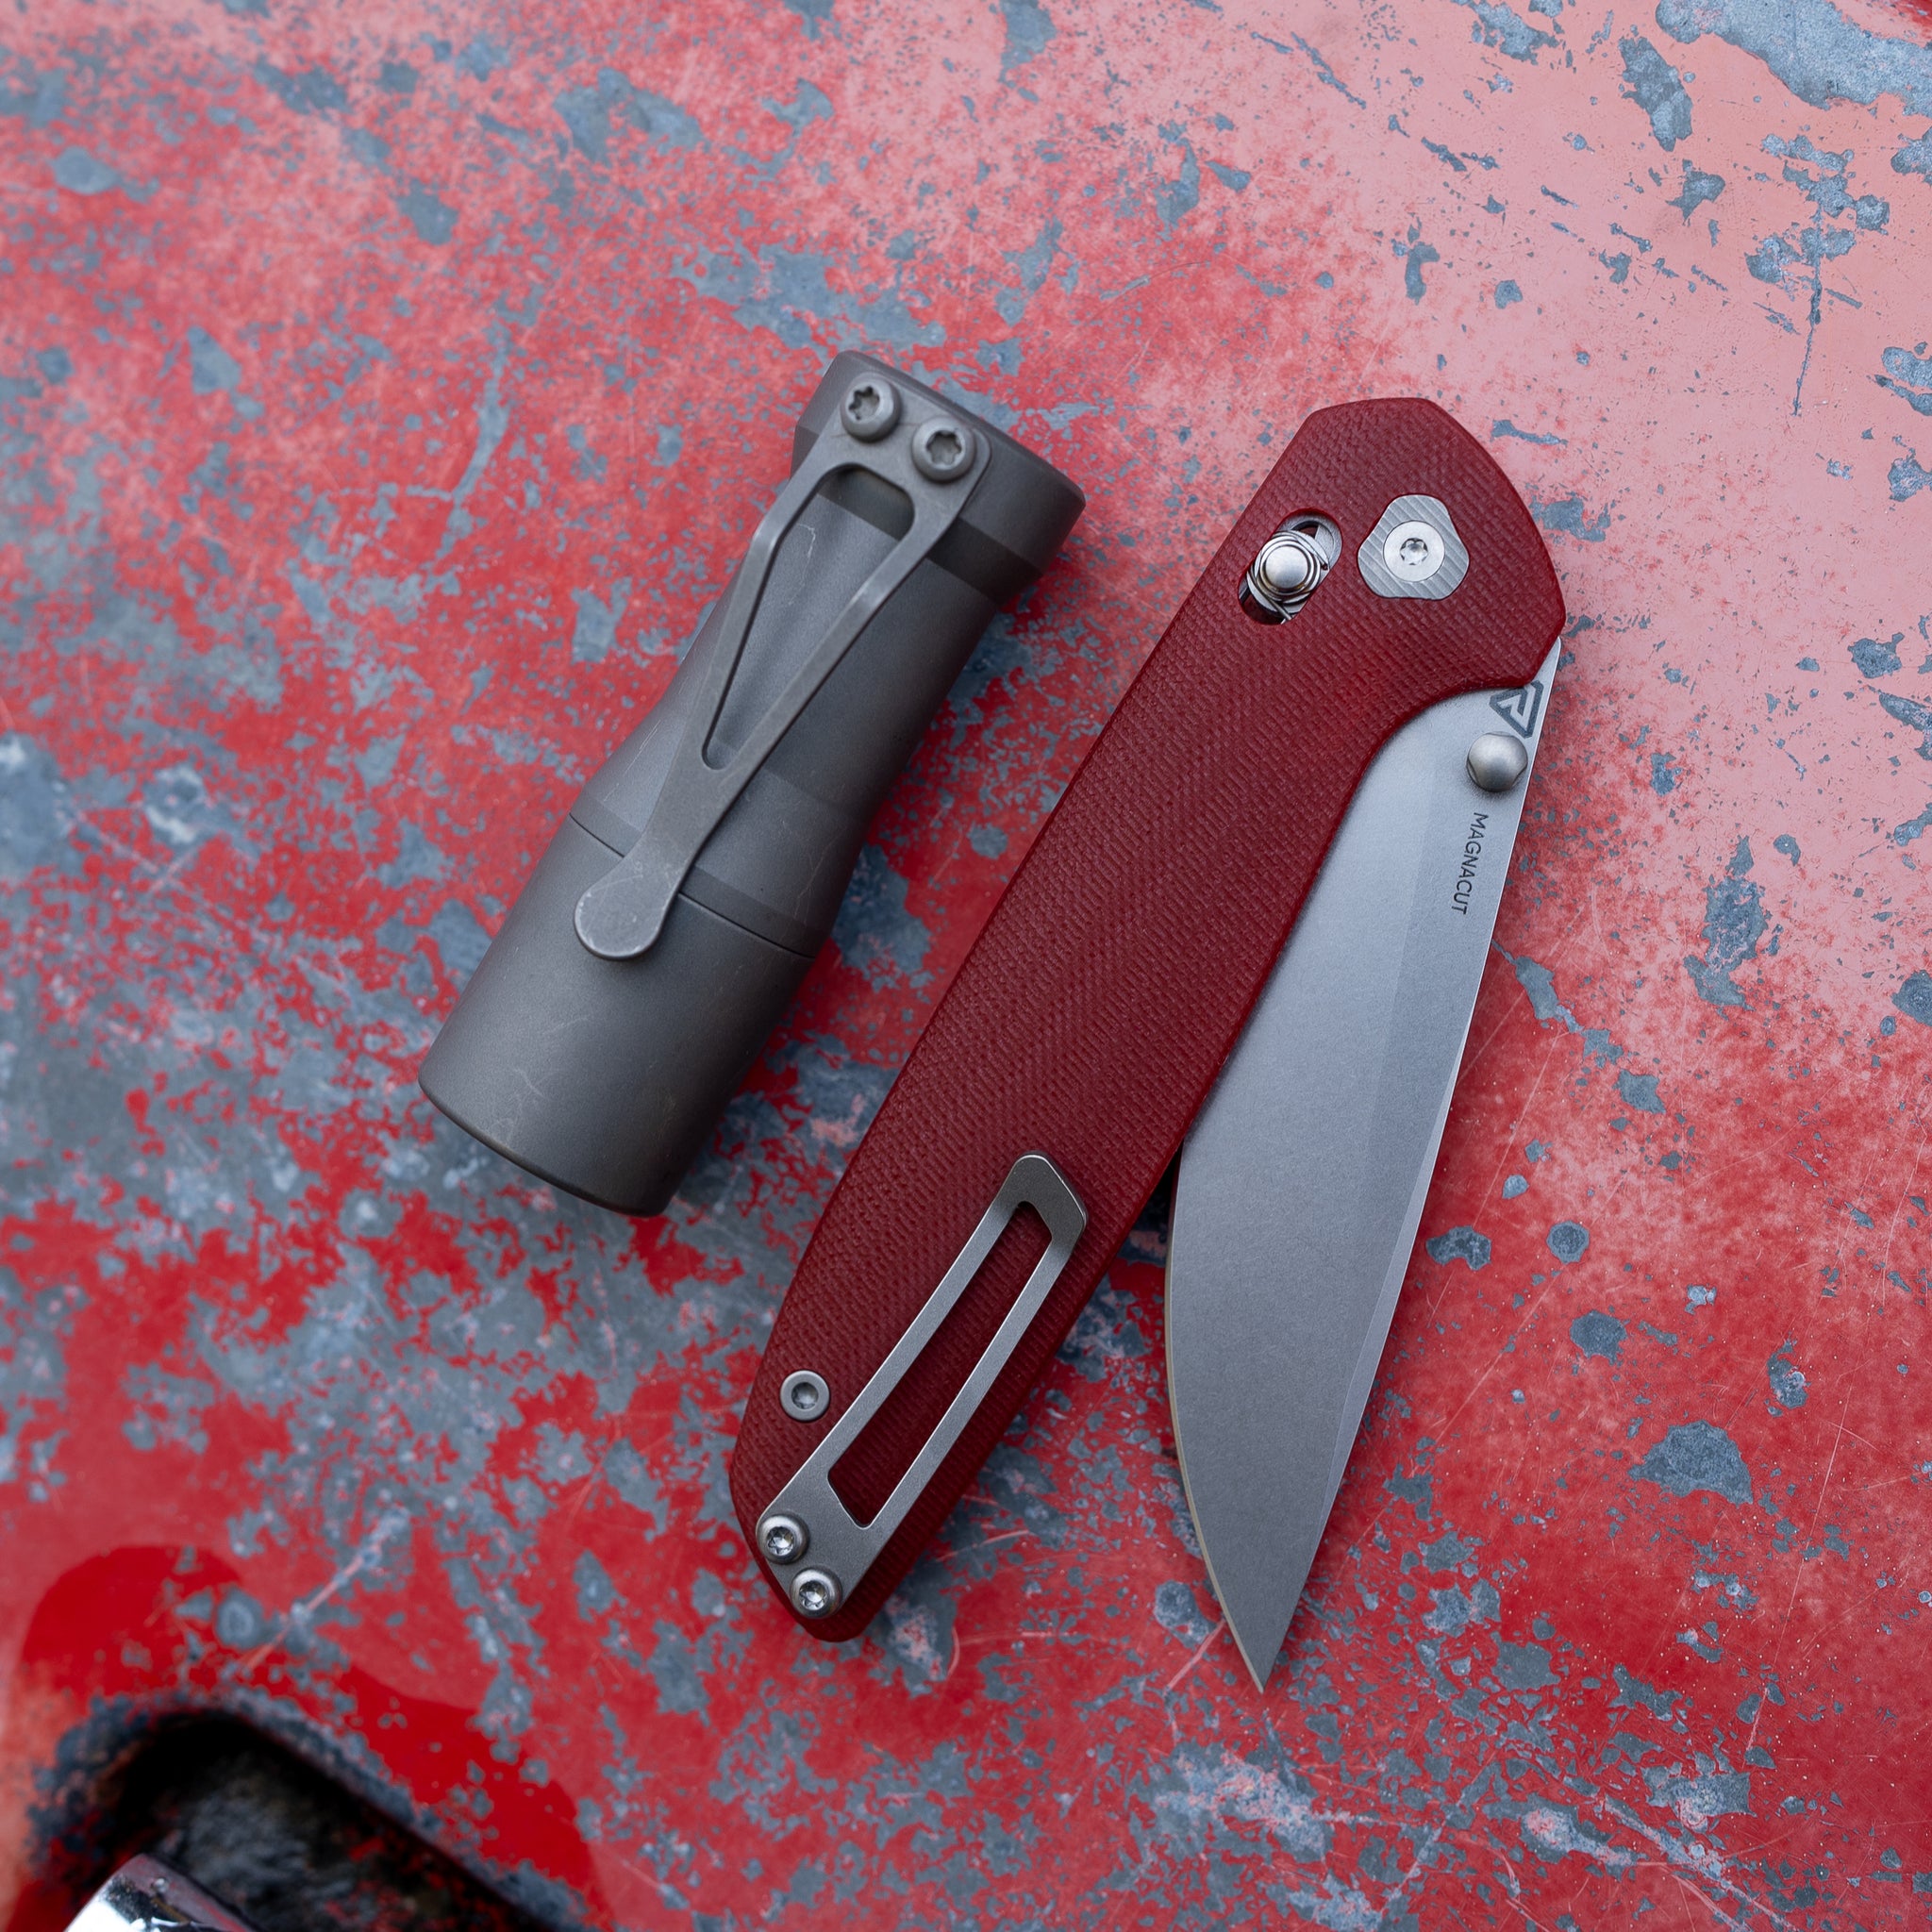 Tactile Knife Co. - G-10 Maverick